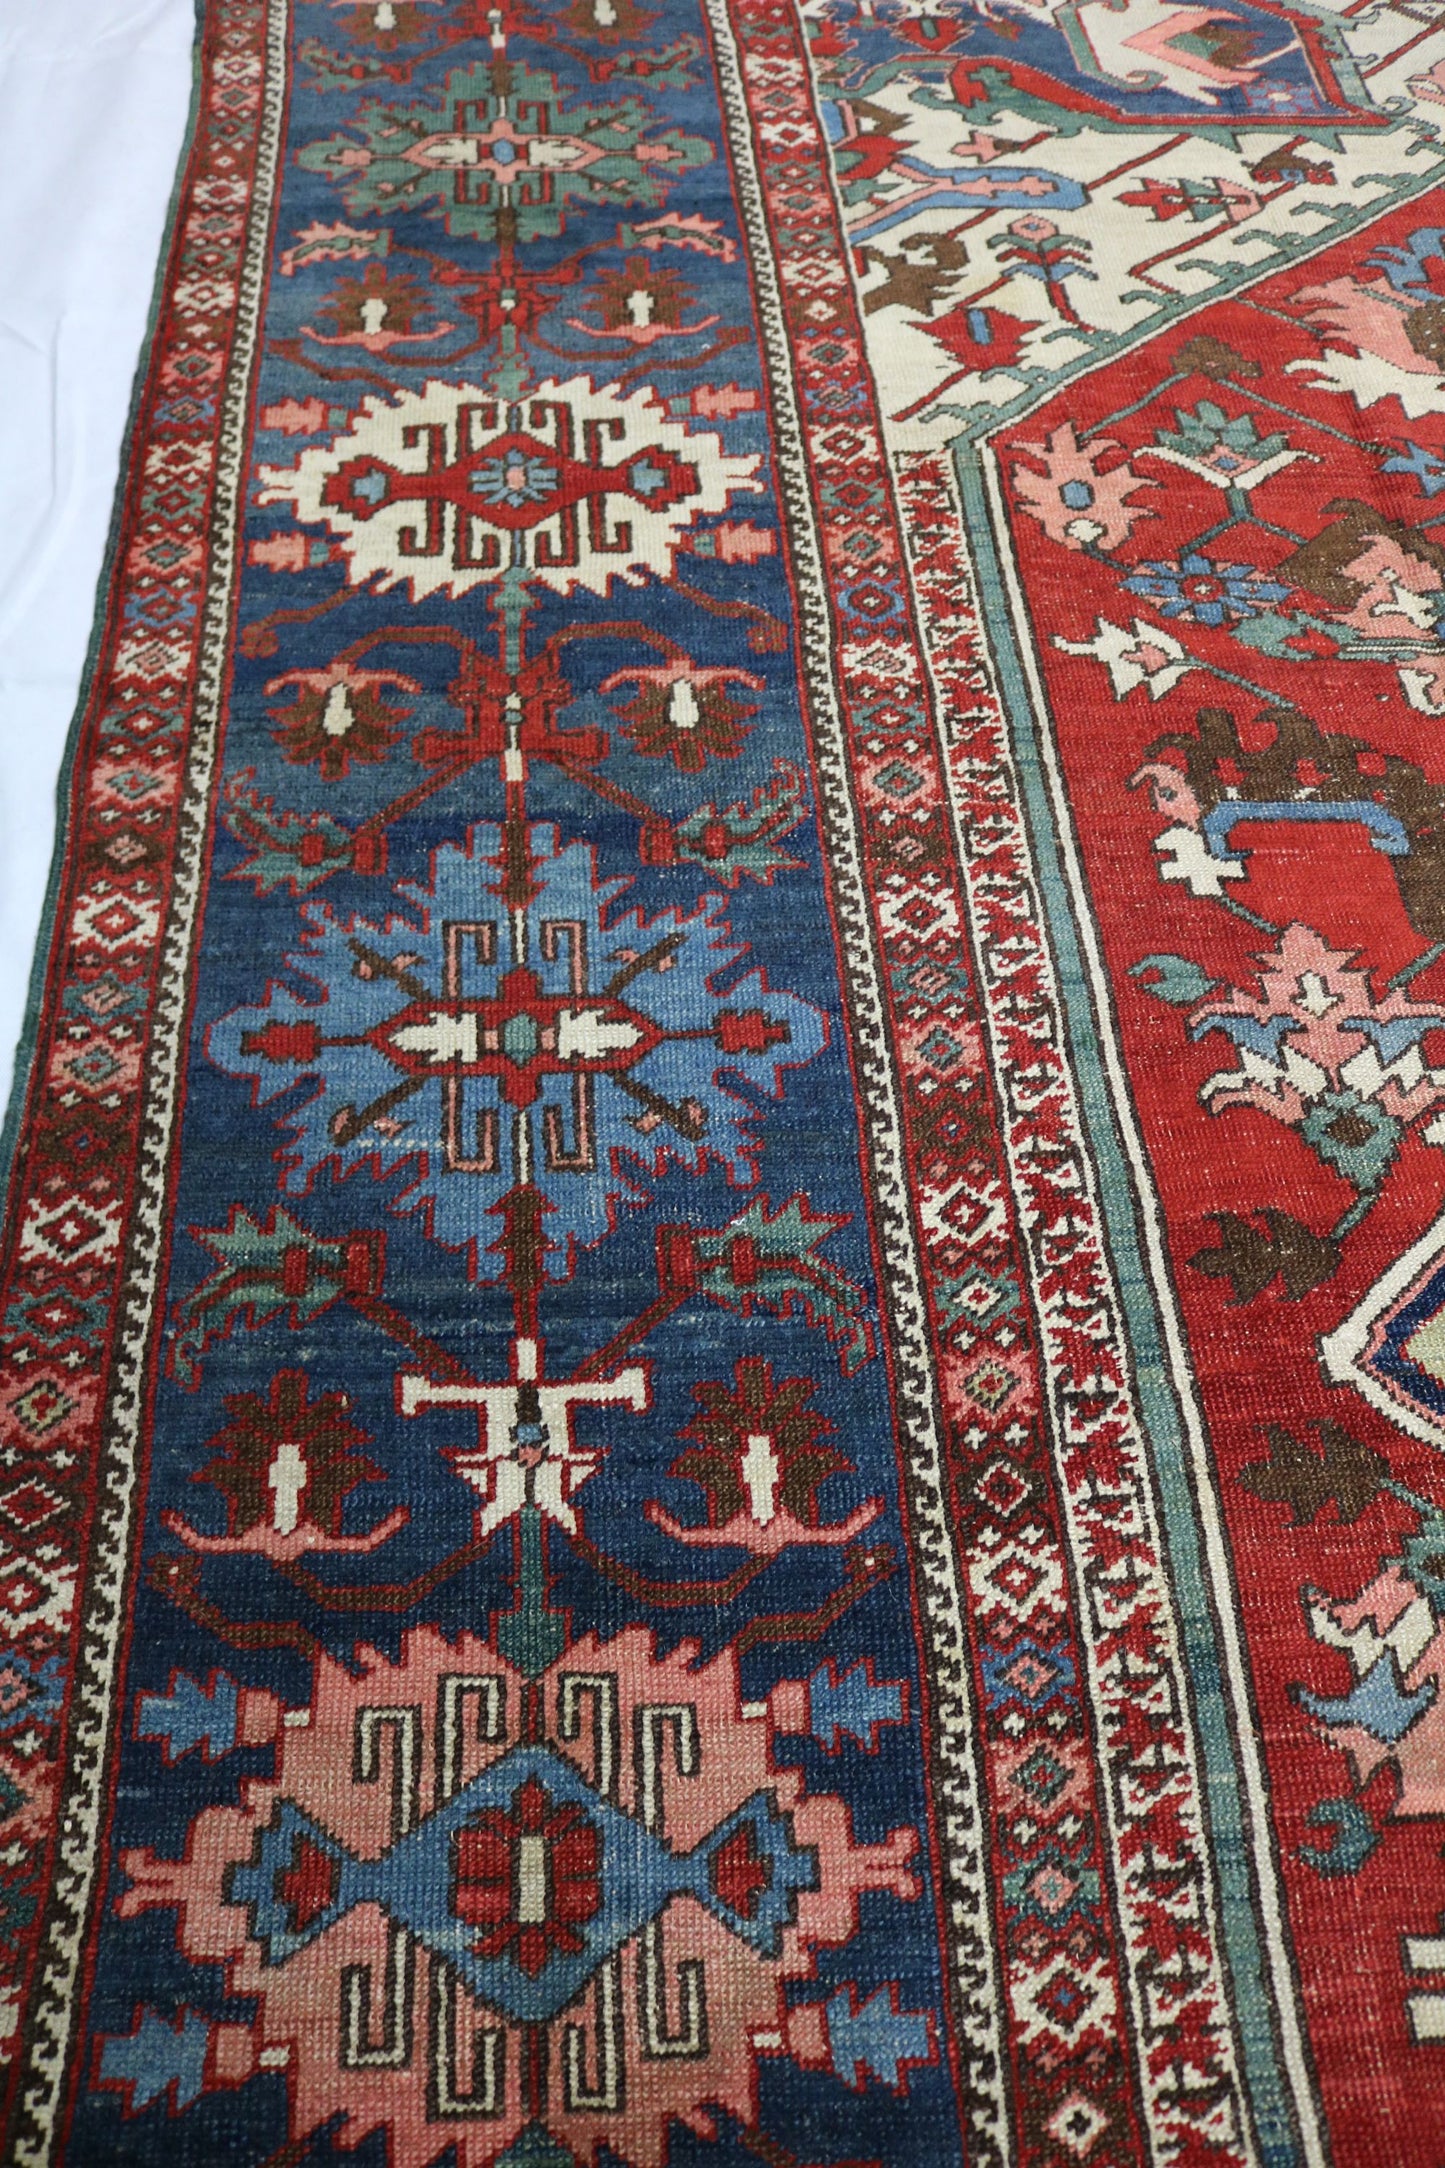 Antique Persian  Heriz Serapi Carpet